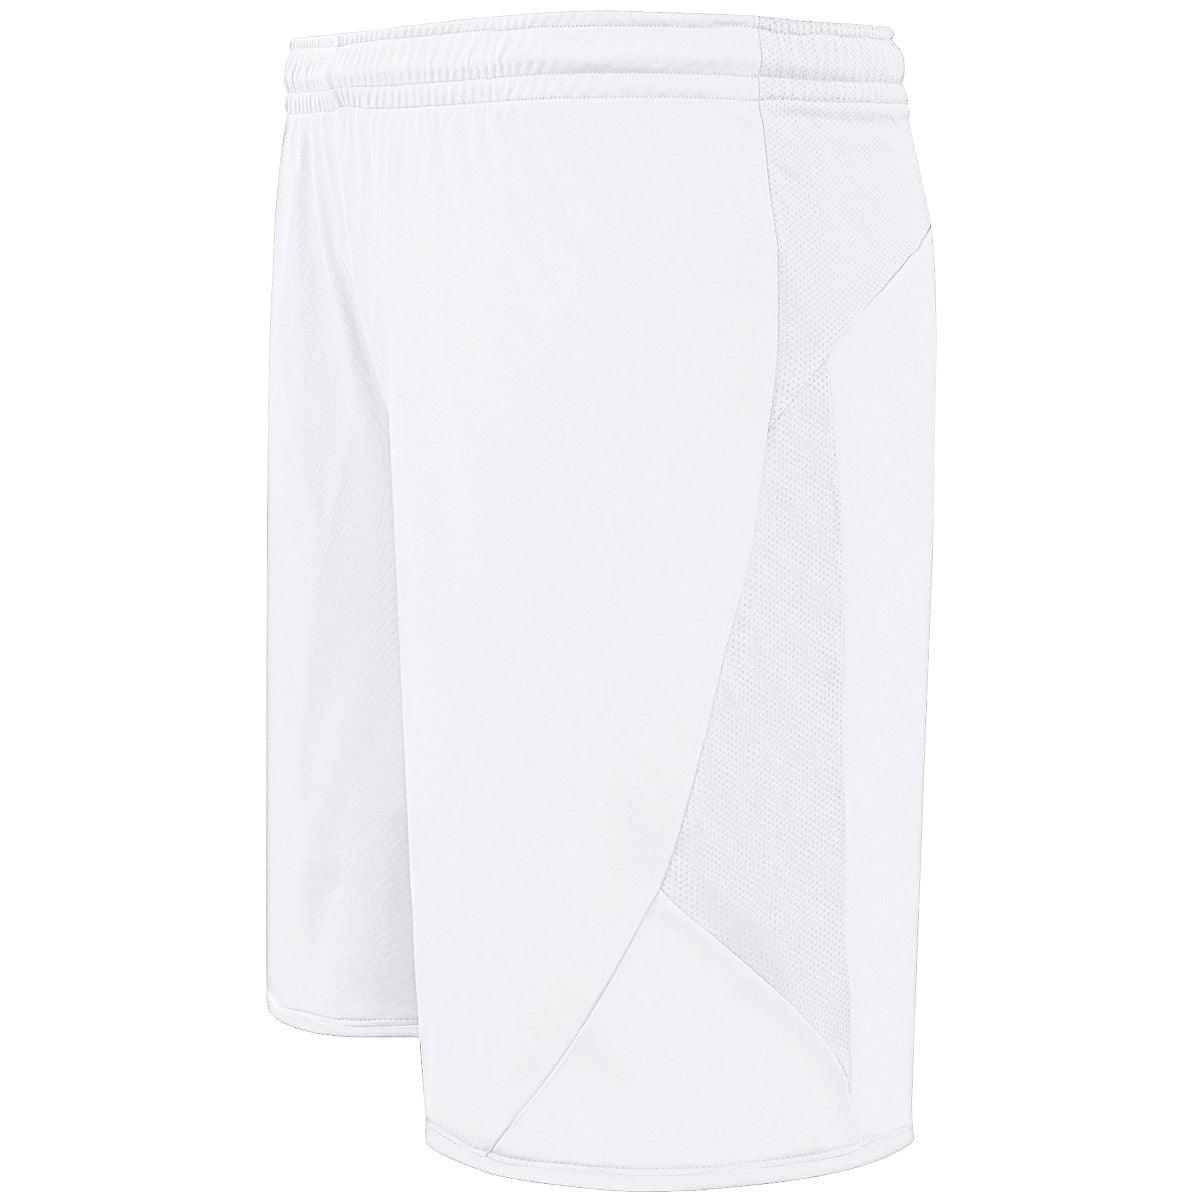 Club Shorts - Dresses Max